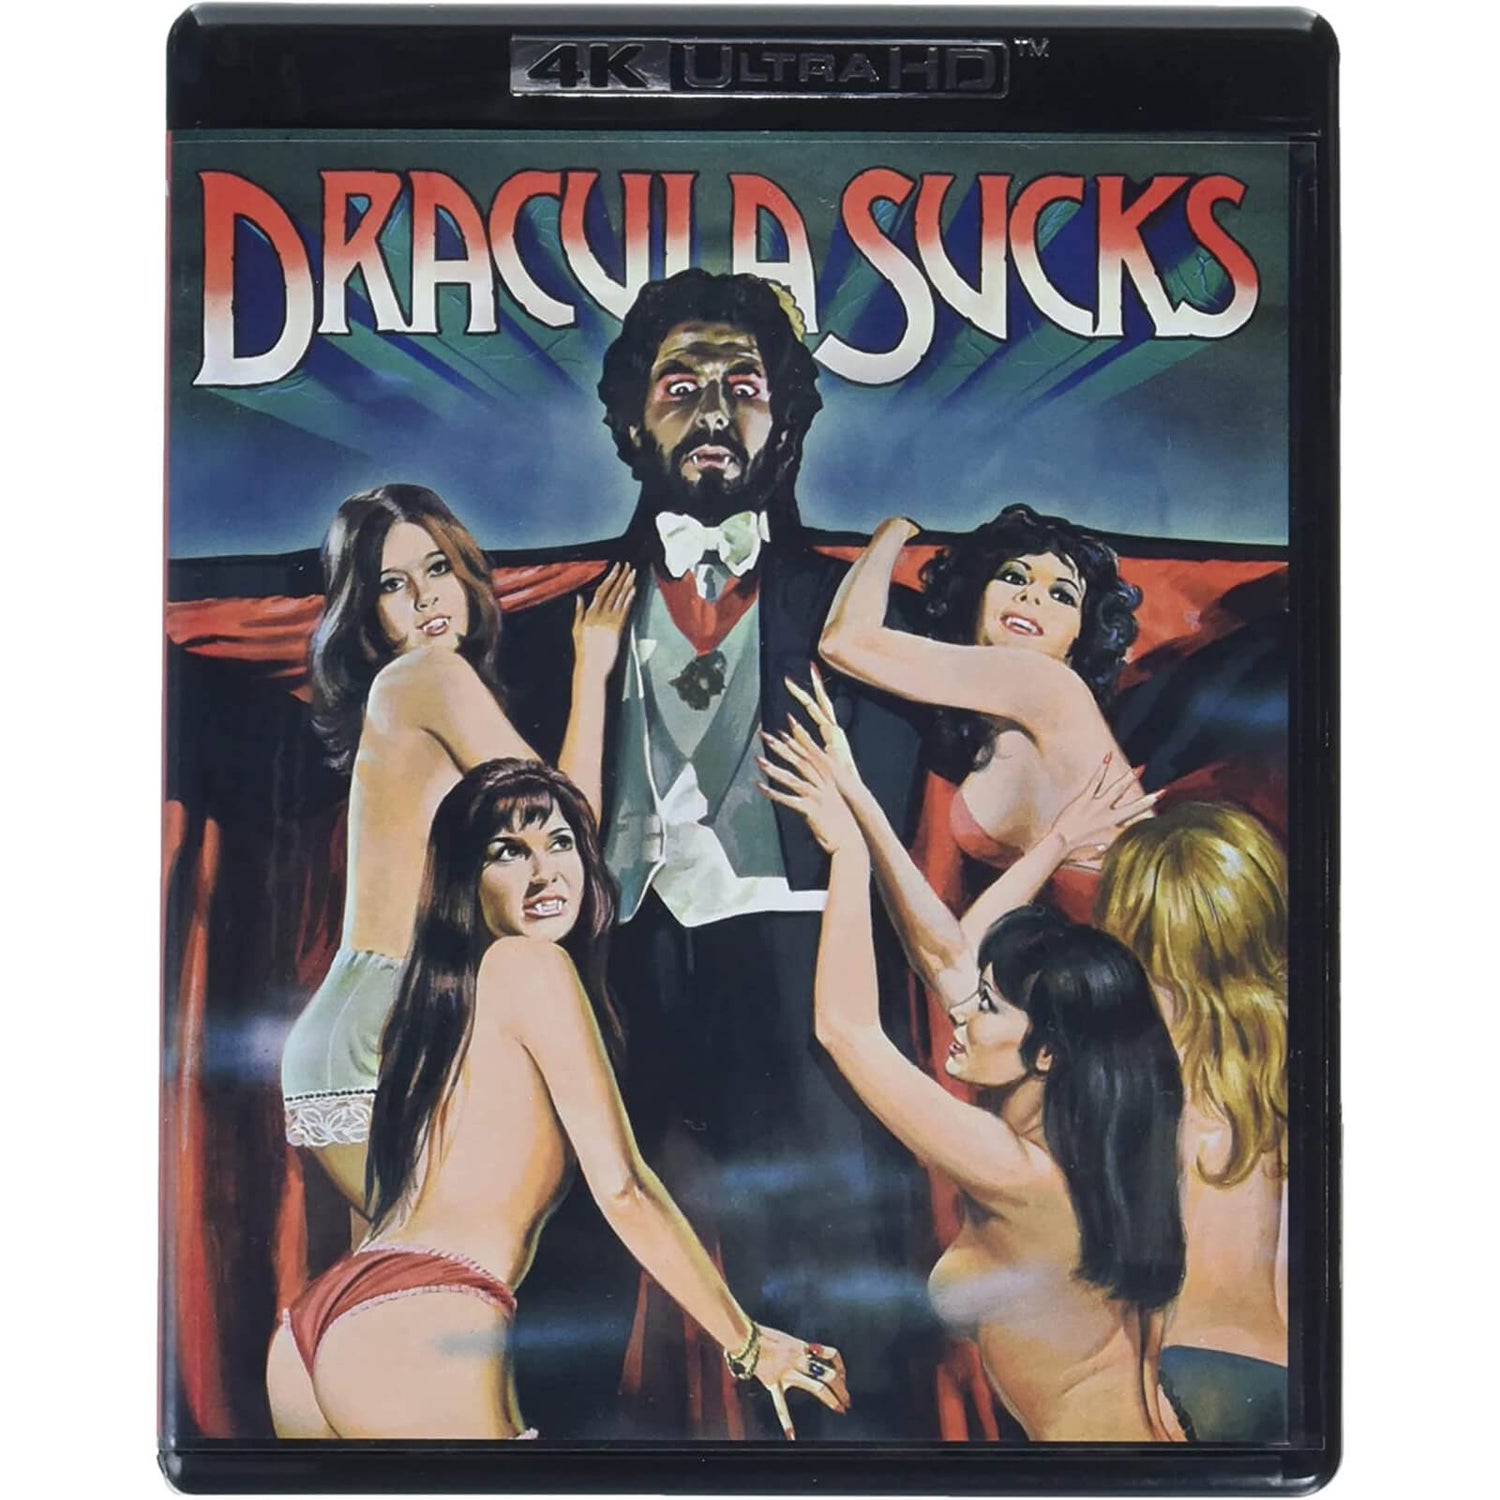 Dracula Sucks - 4K Ultra HD (Includes Blu-ray) (US Import)